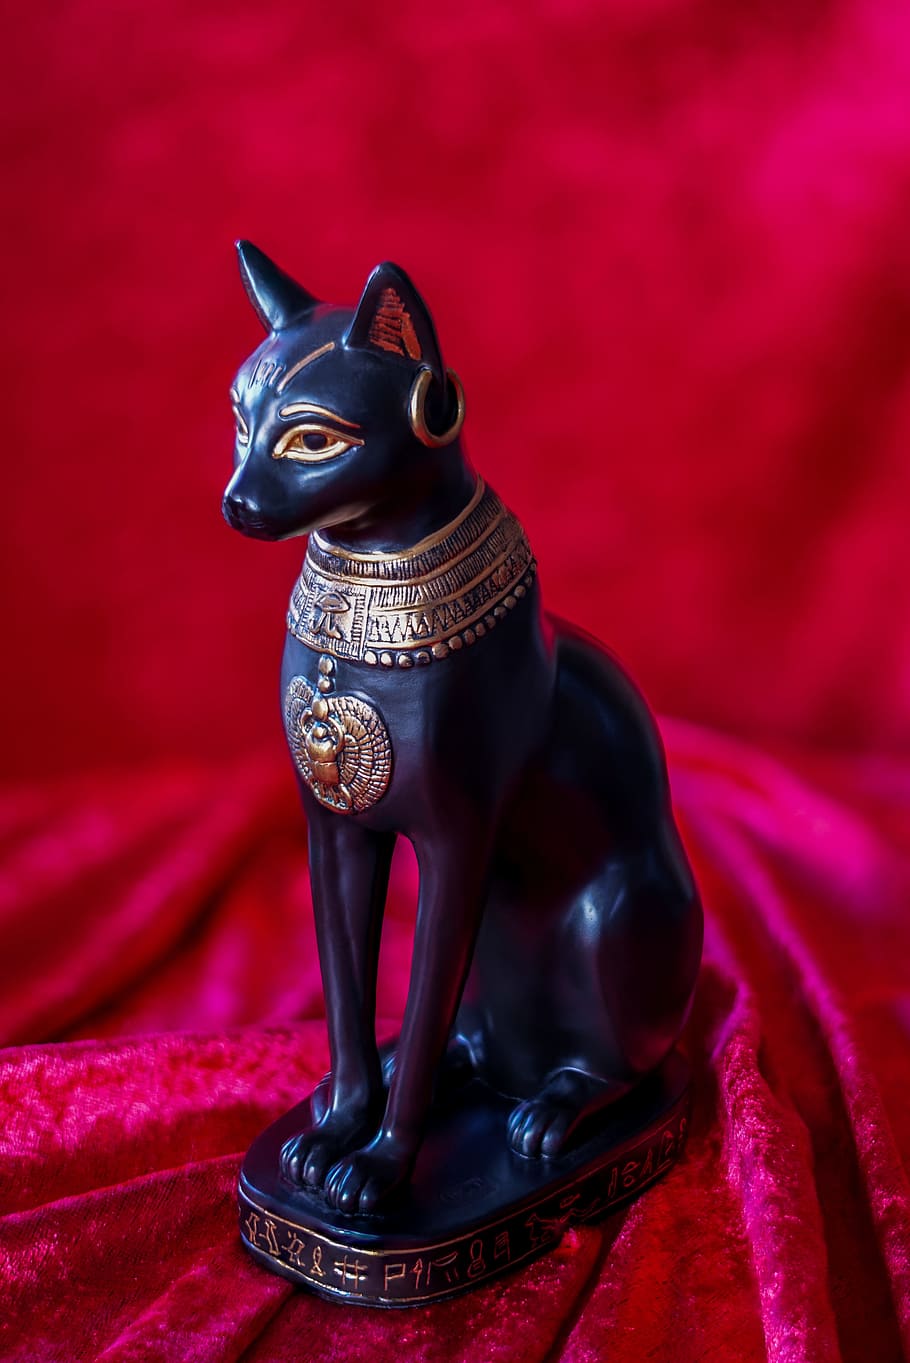 bastet figurine, bastet cat, egypt, cat sculpture, statue, egyptian cat goddess, florencia, symbol, symbolic, mystical